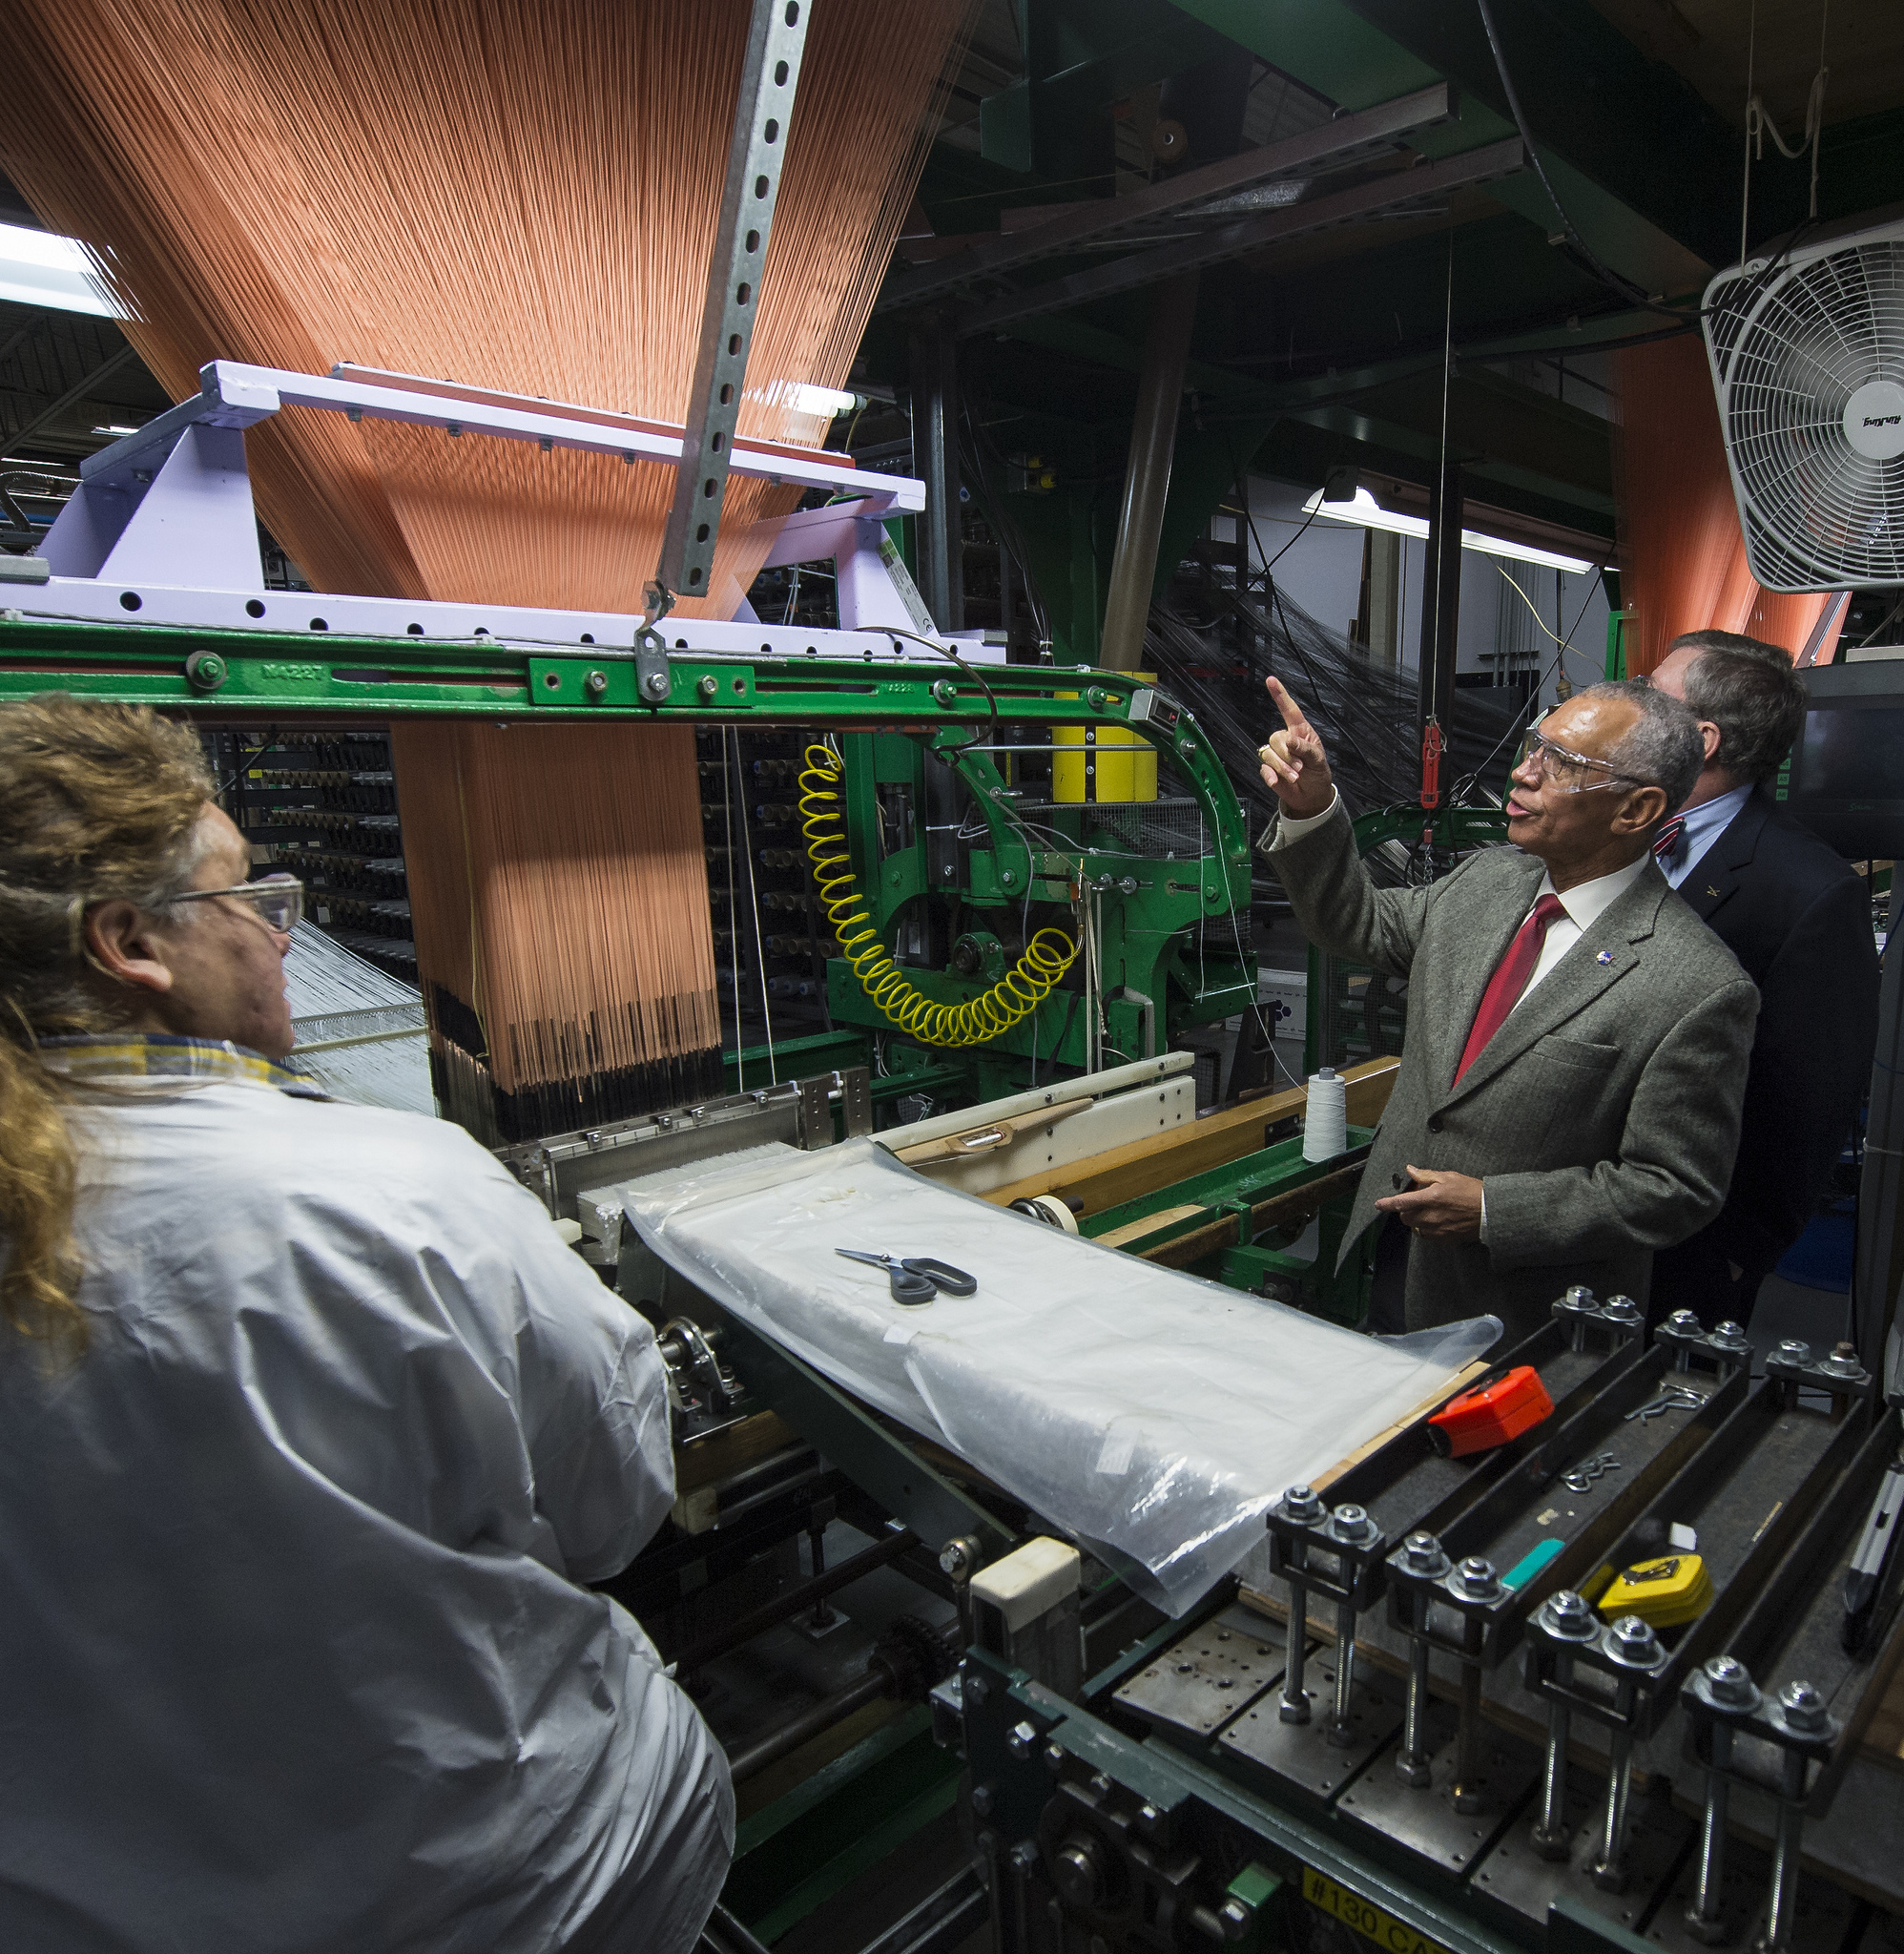 NASA Administrator Charles Bolden inspects a weaving loom at Bally Ribbon Mills facility in Bally, Pennsylvania